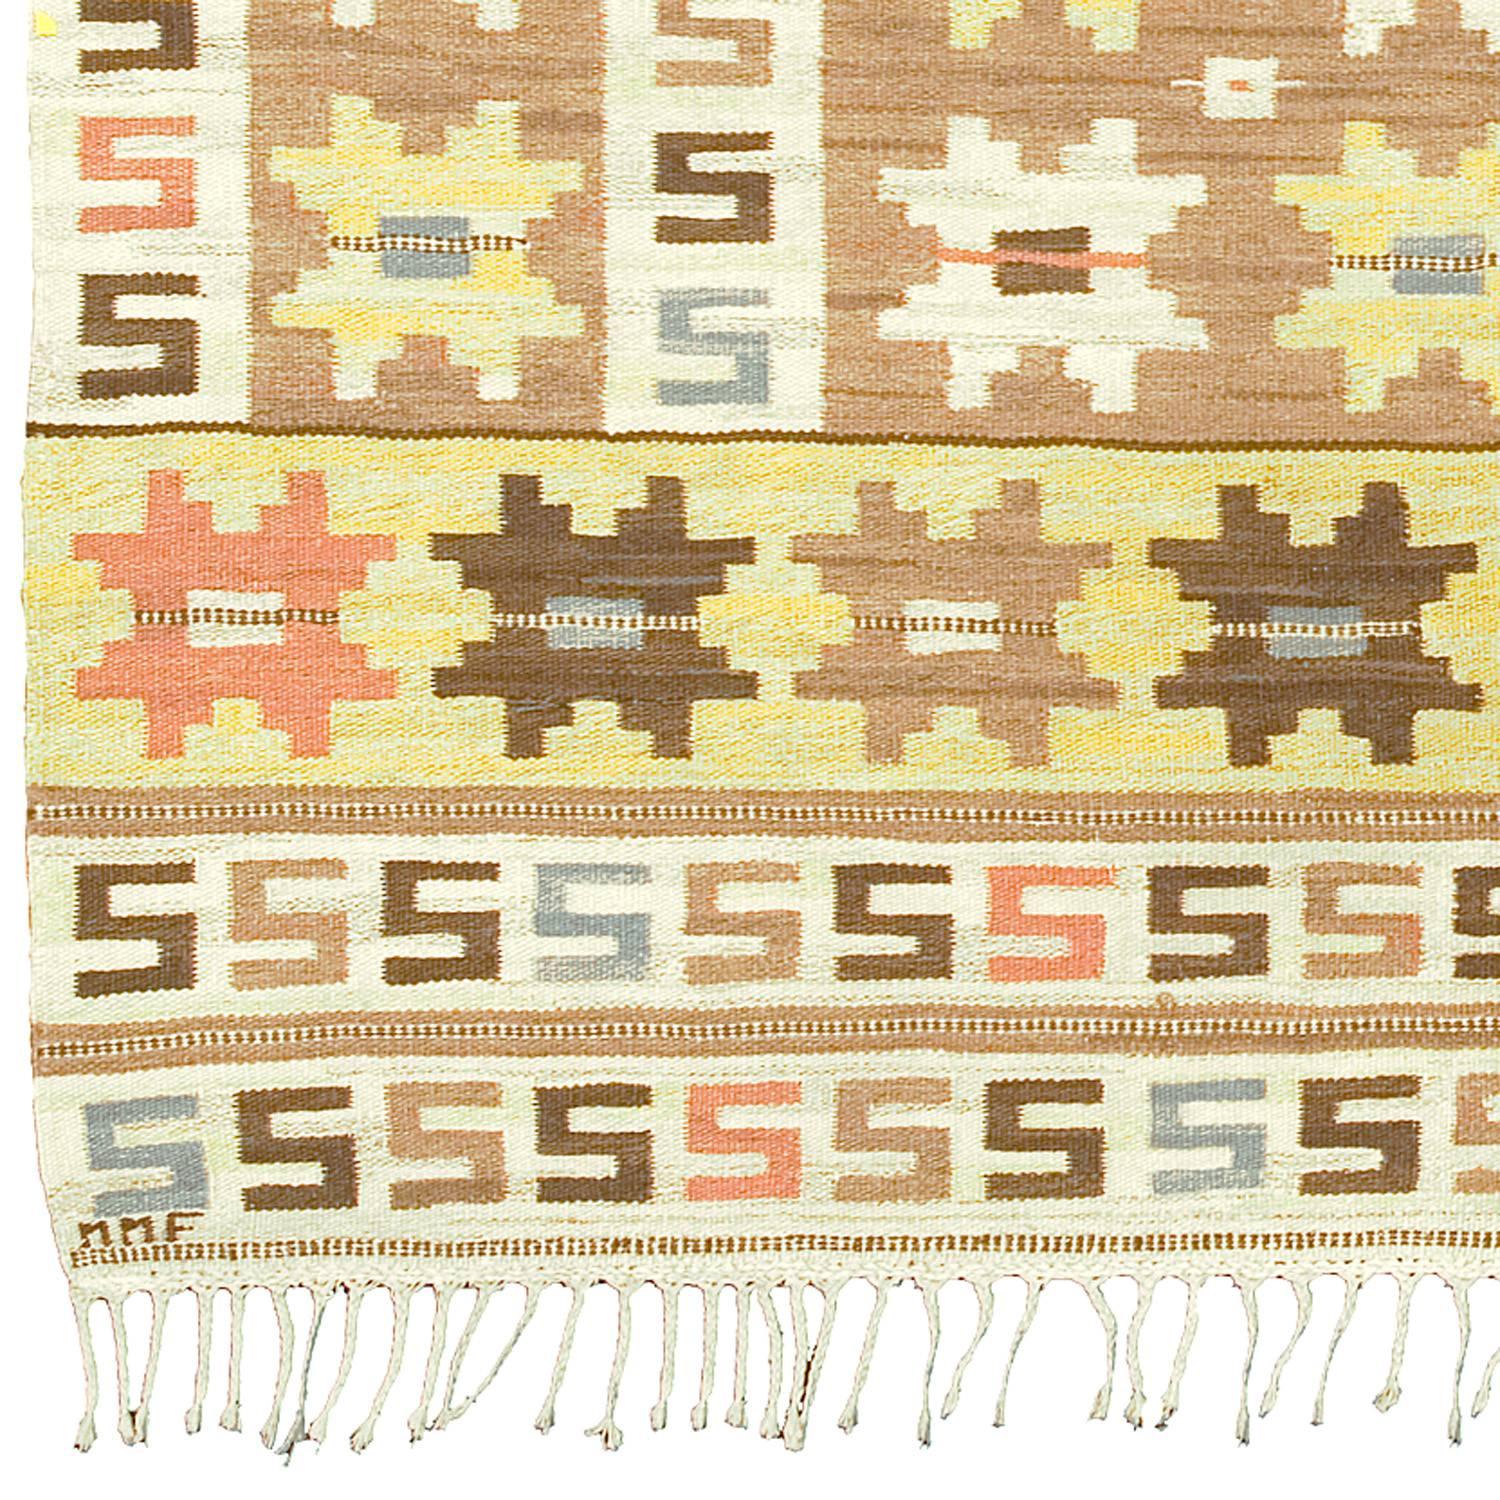 20th century Swedish flat-weave carpet
Initialed 